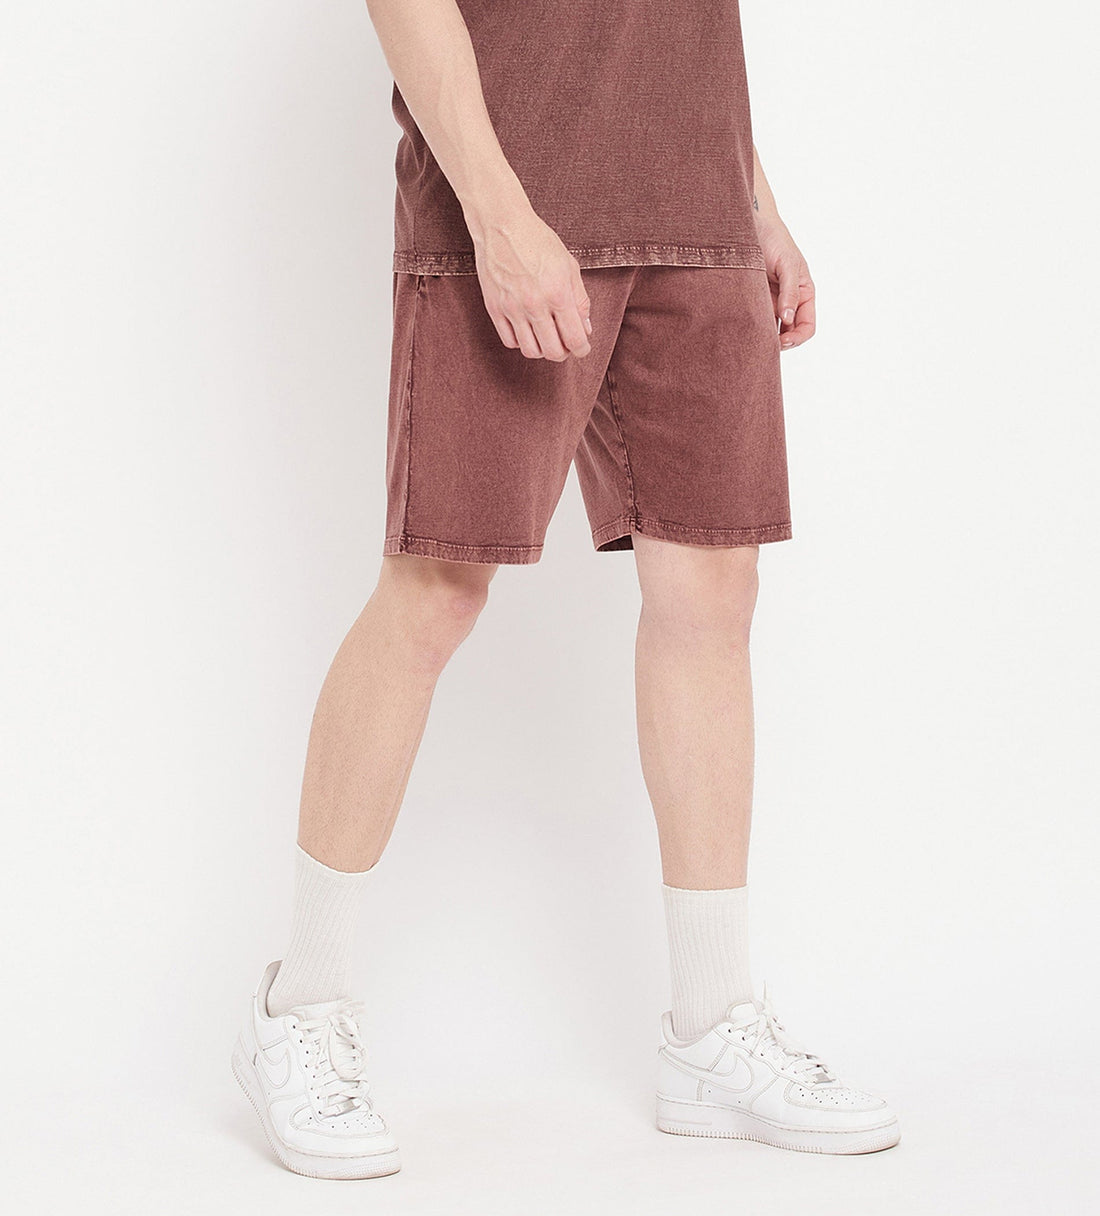 Shorts Shorts Brown Tie & Dye Rugged Shorts for Men